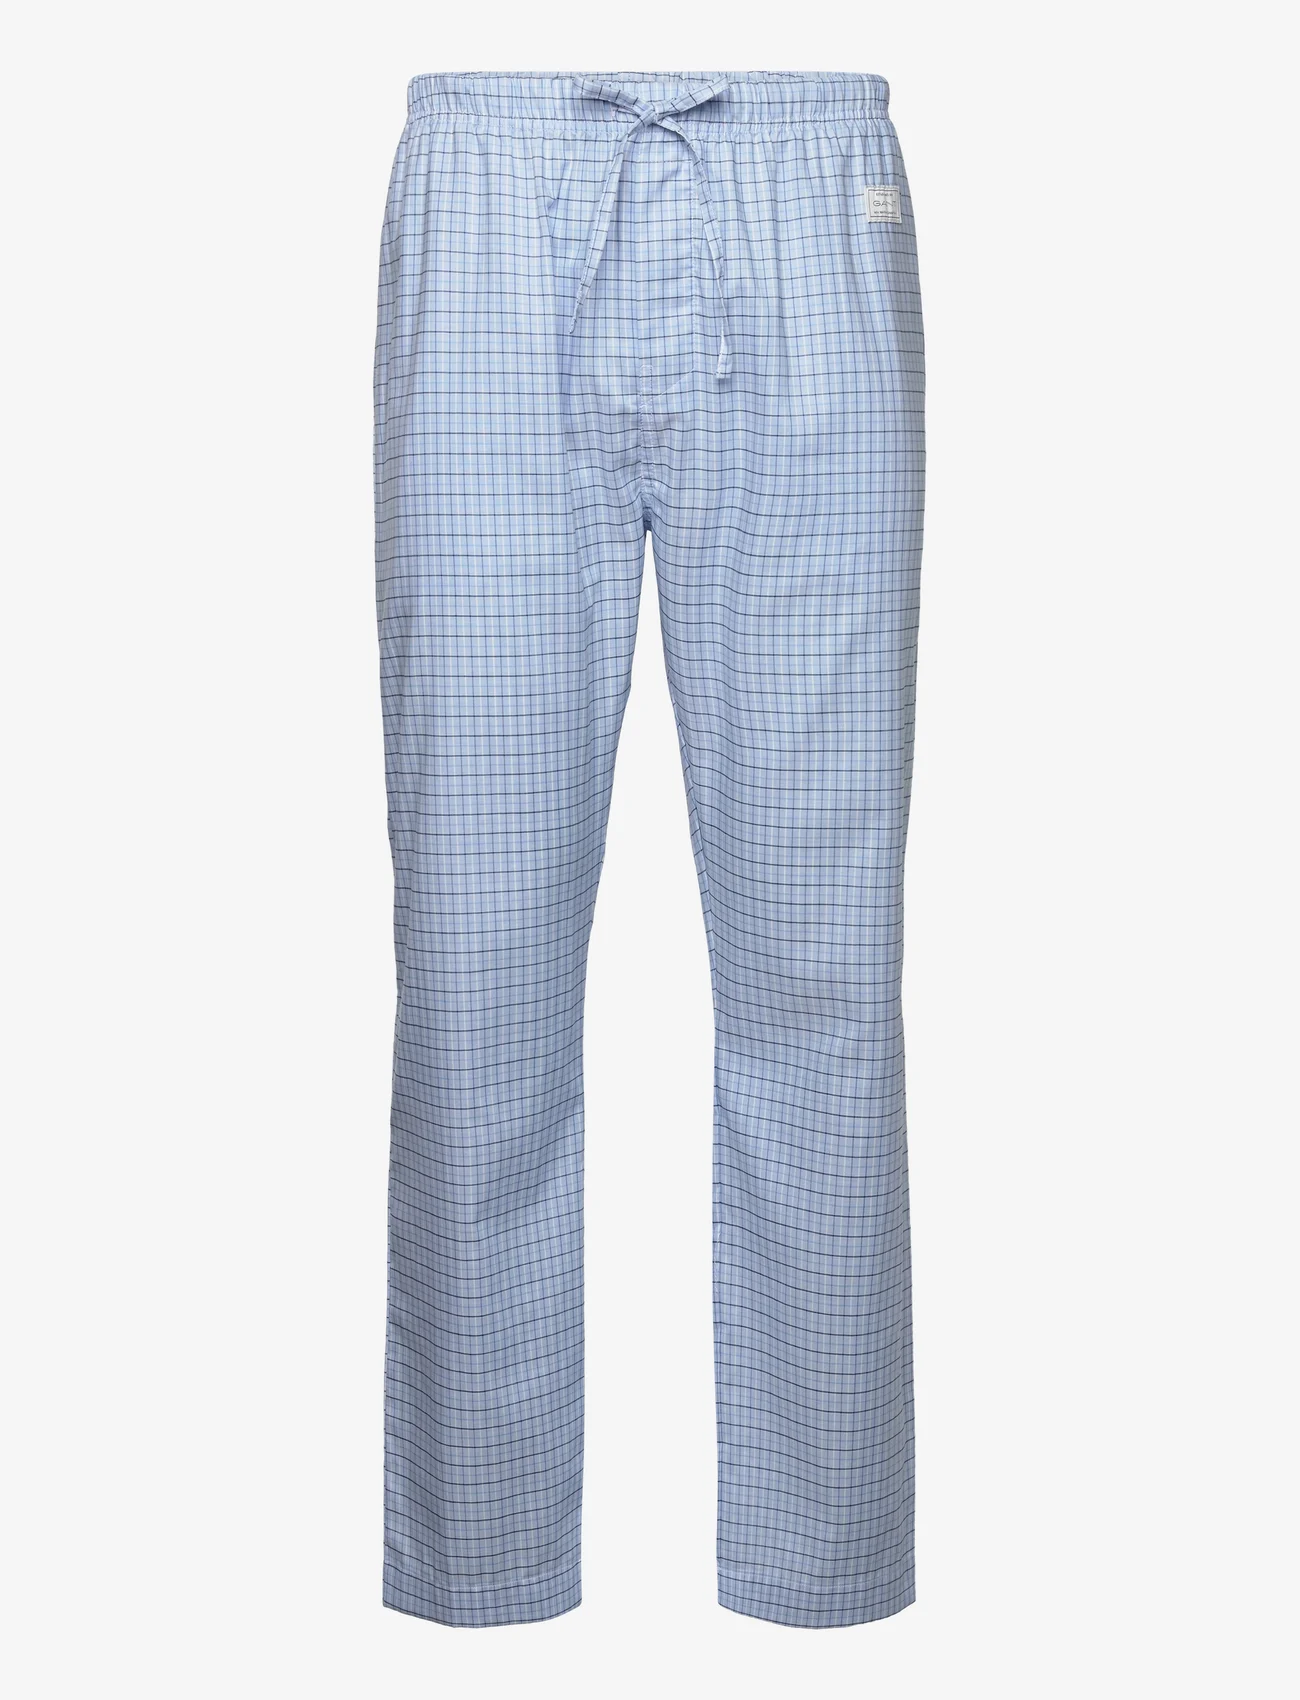 GANT - CHECK PAJAMA PANTS - pidžaamapüksid - capri blue - 0